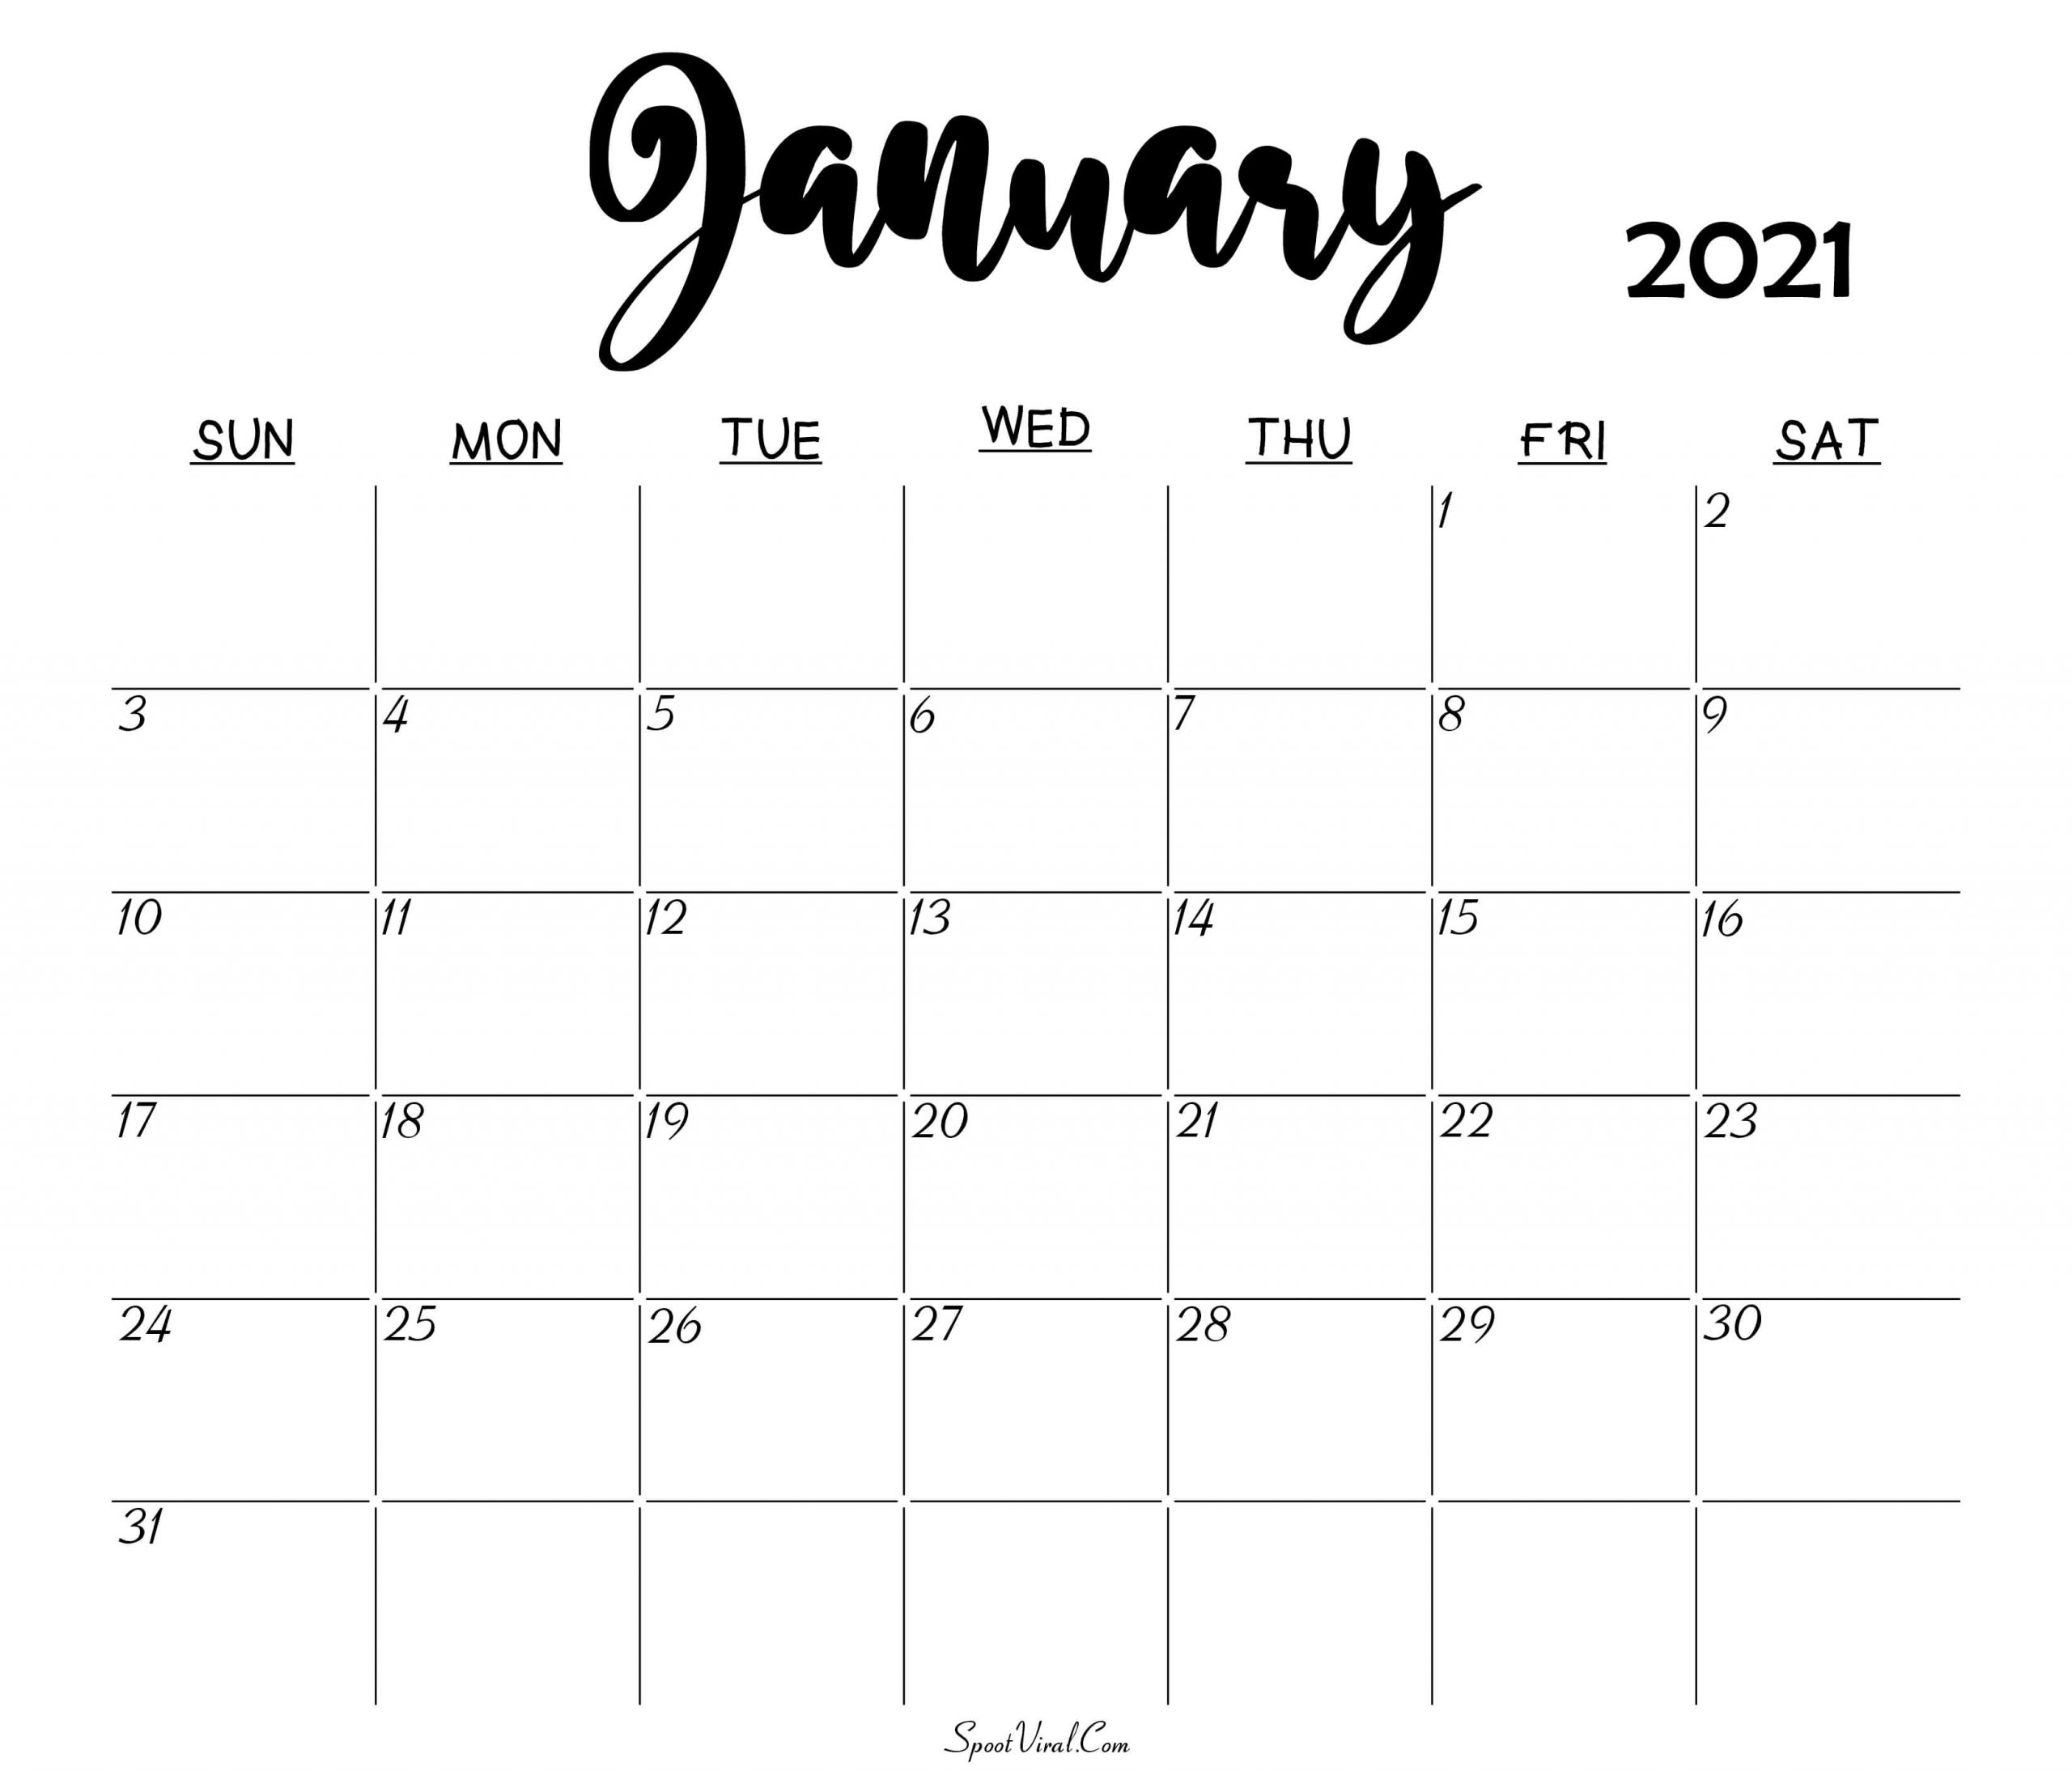 January 2021 Calendar Printable Free Monthly / January